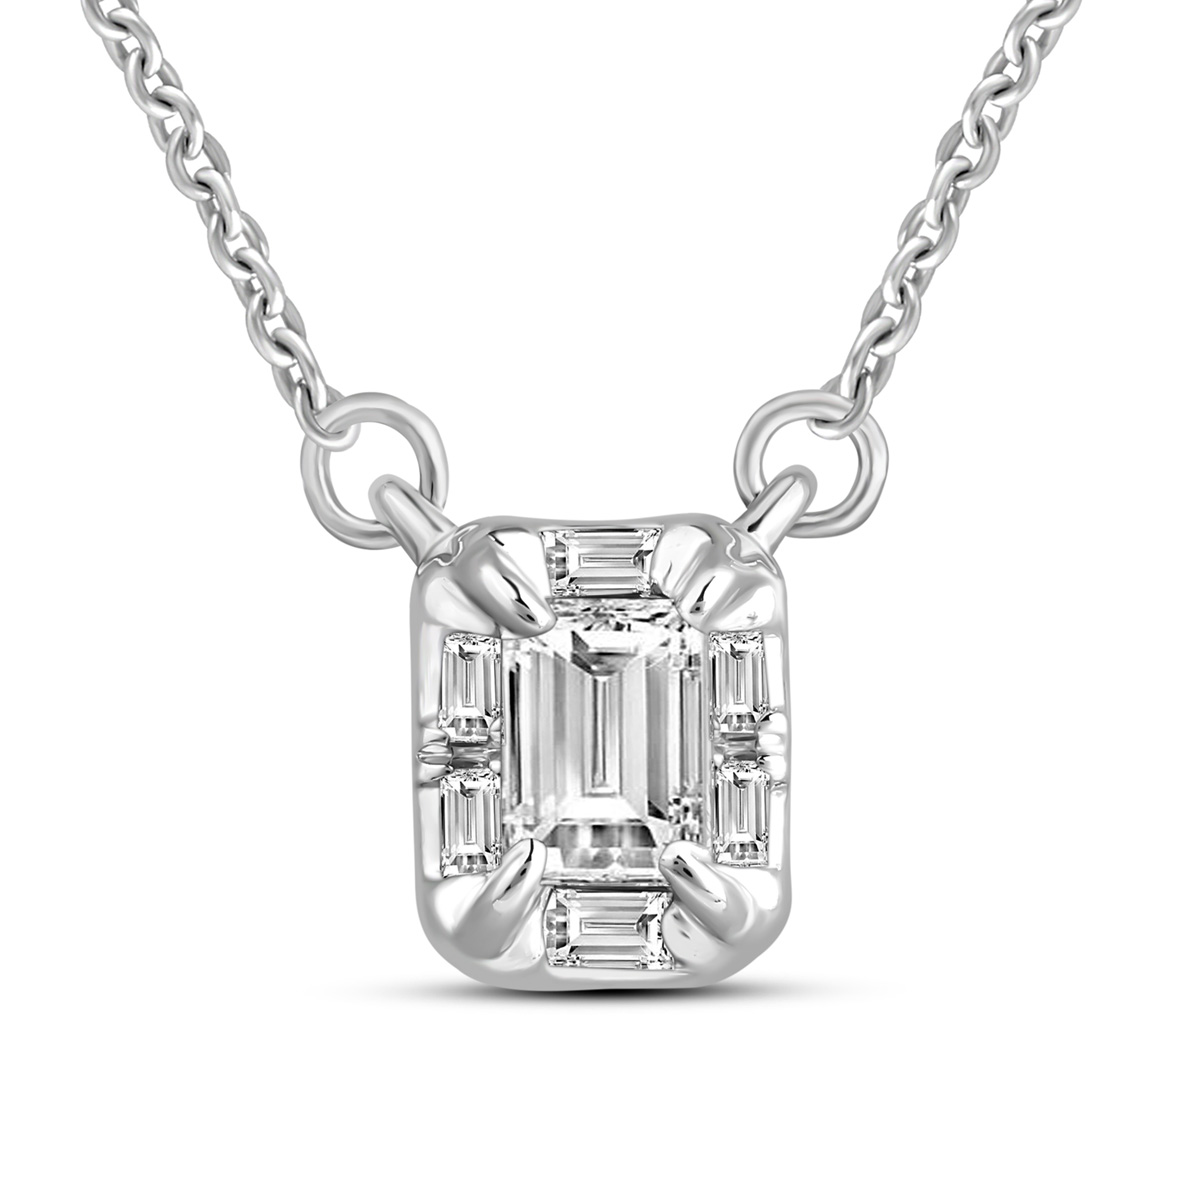 HE53118SWD4WN
14K white Gold Baguette cut diamond pendant